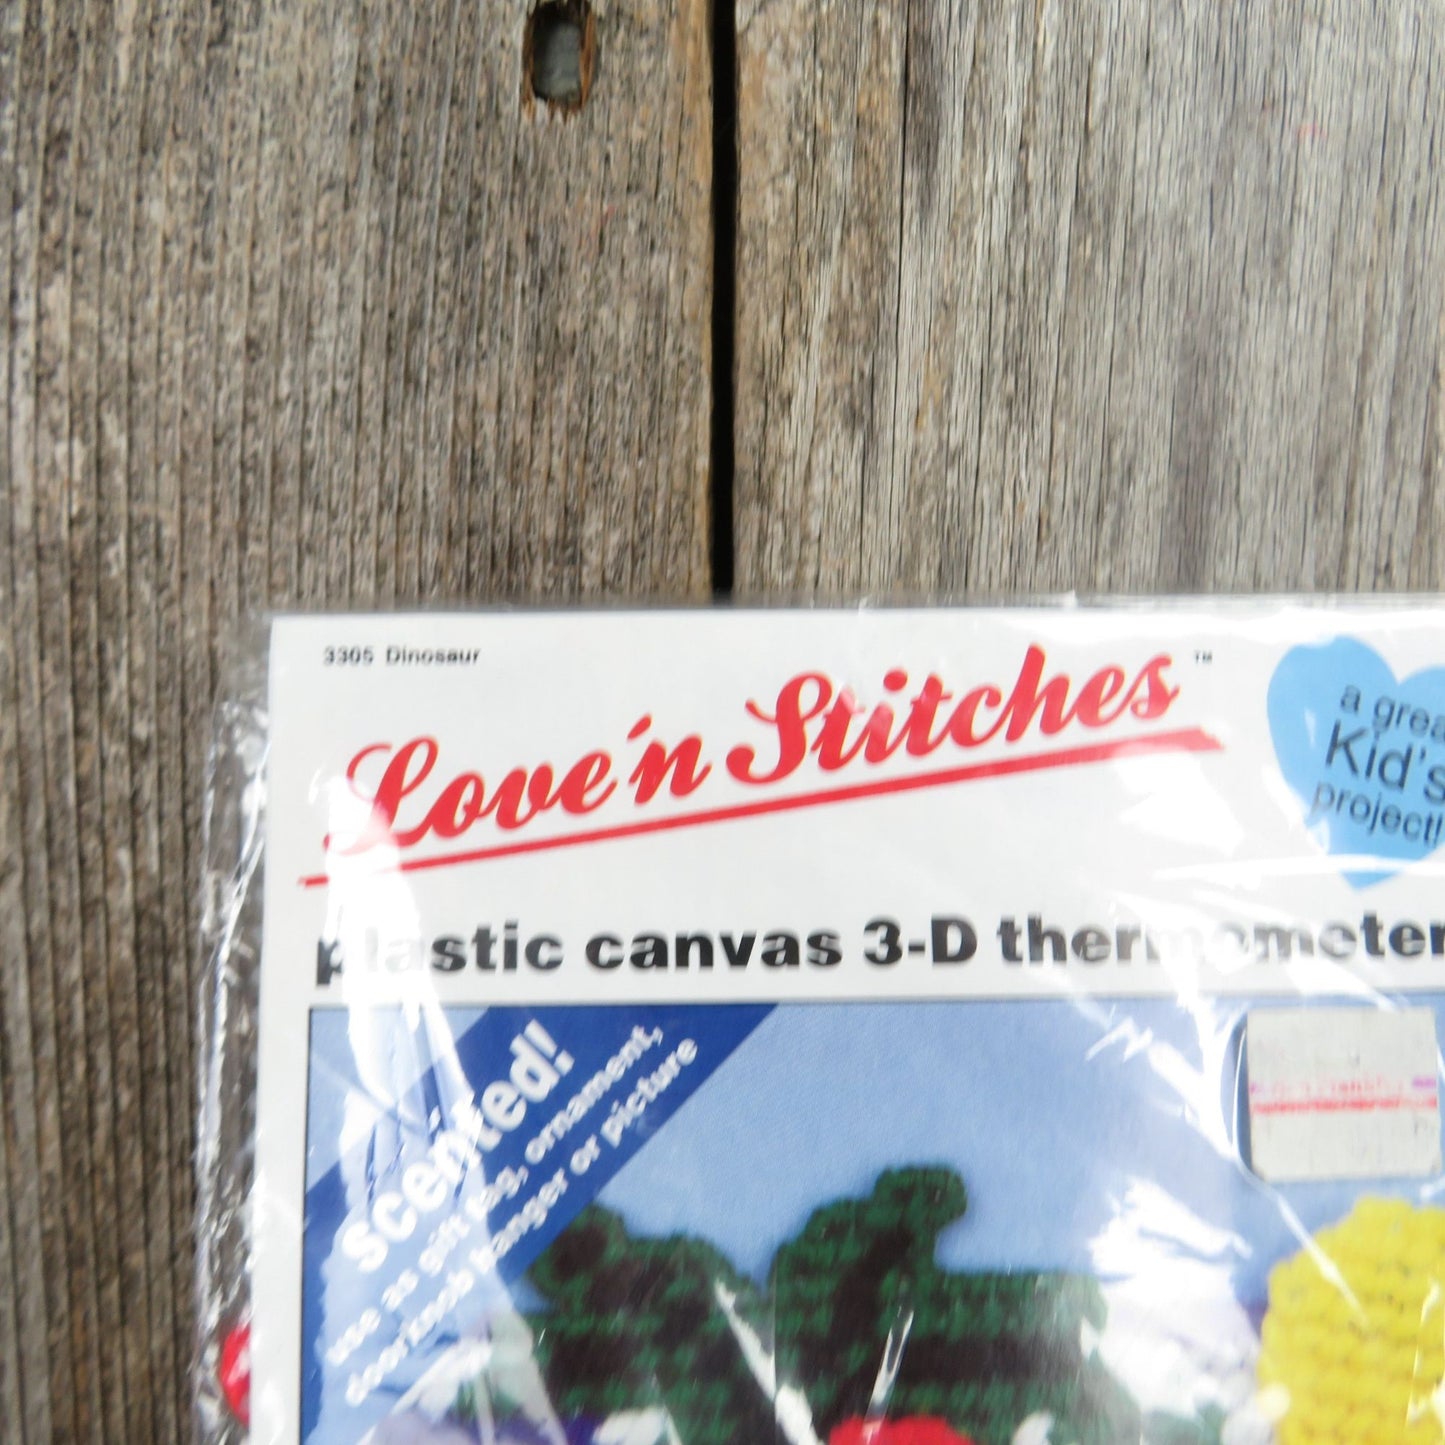 Dinosaur Thermometer Plastic Canvas 3-D Kit Love n Stitches Needlepoint Kit Beginner